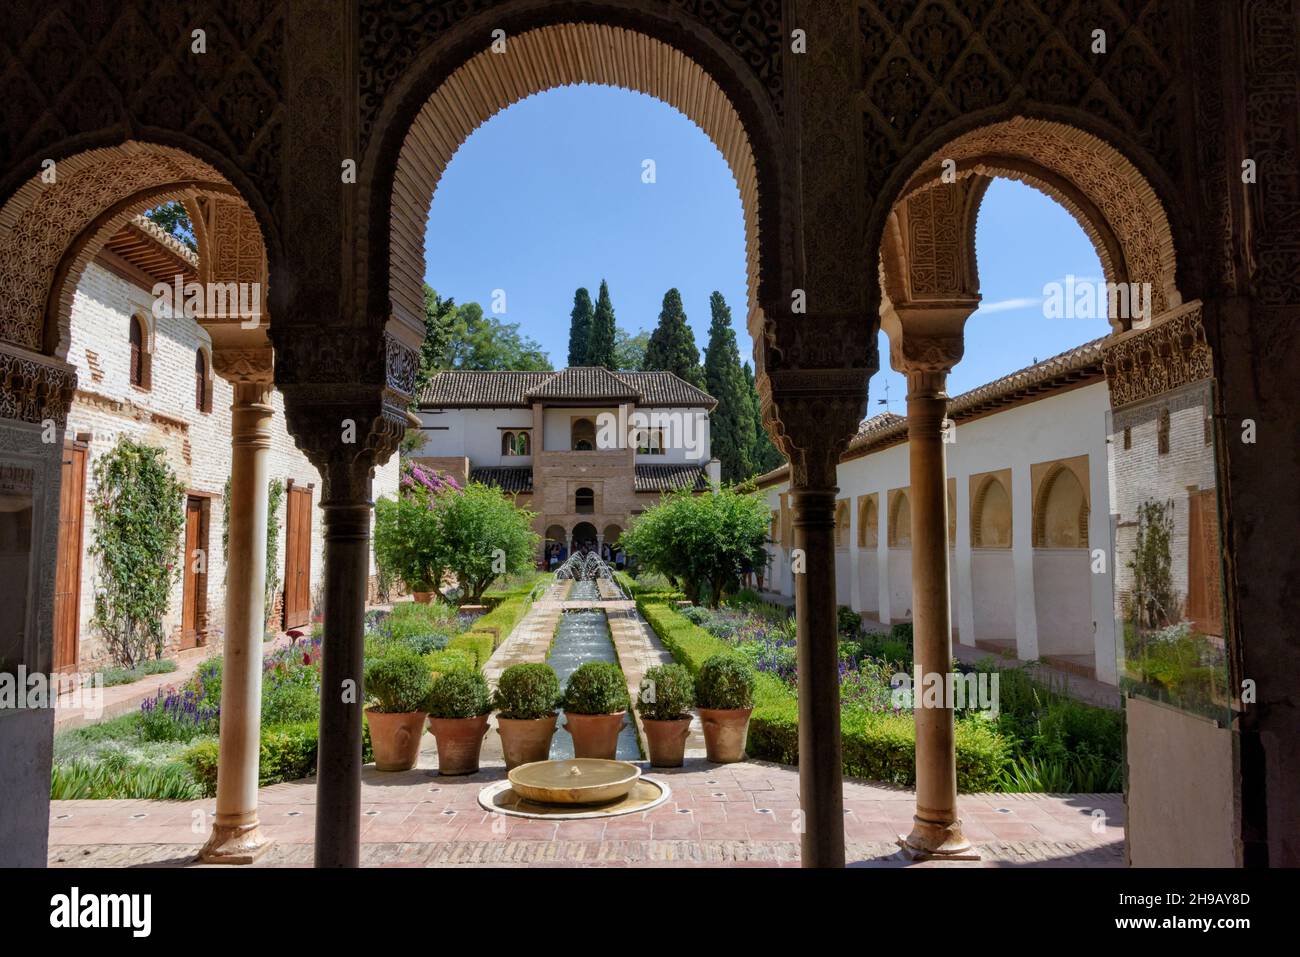 Palacio de Generalife and Patio de la Azequia in Alhambra, Granada, Granada Province, Andalusia Autonomous Community, Spain Stock Photo